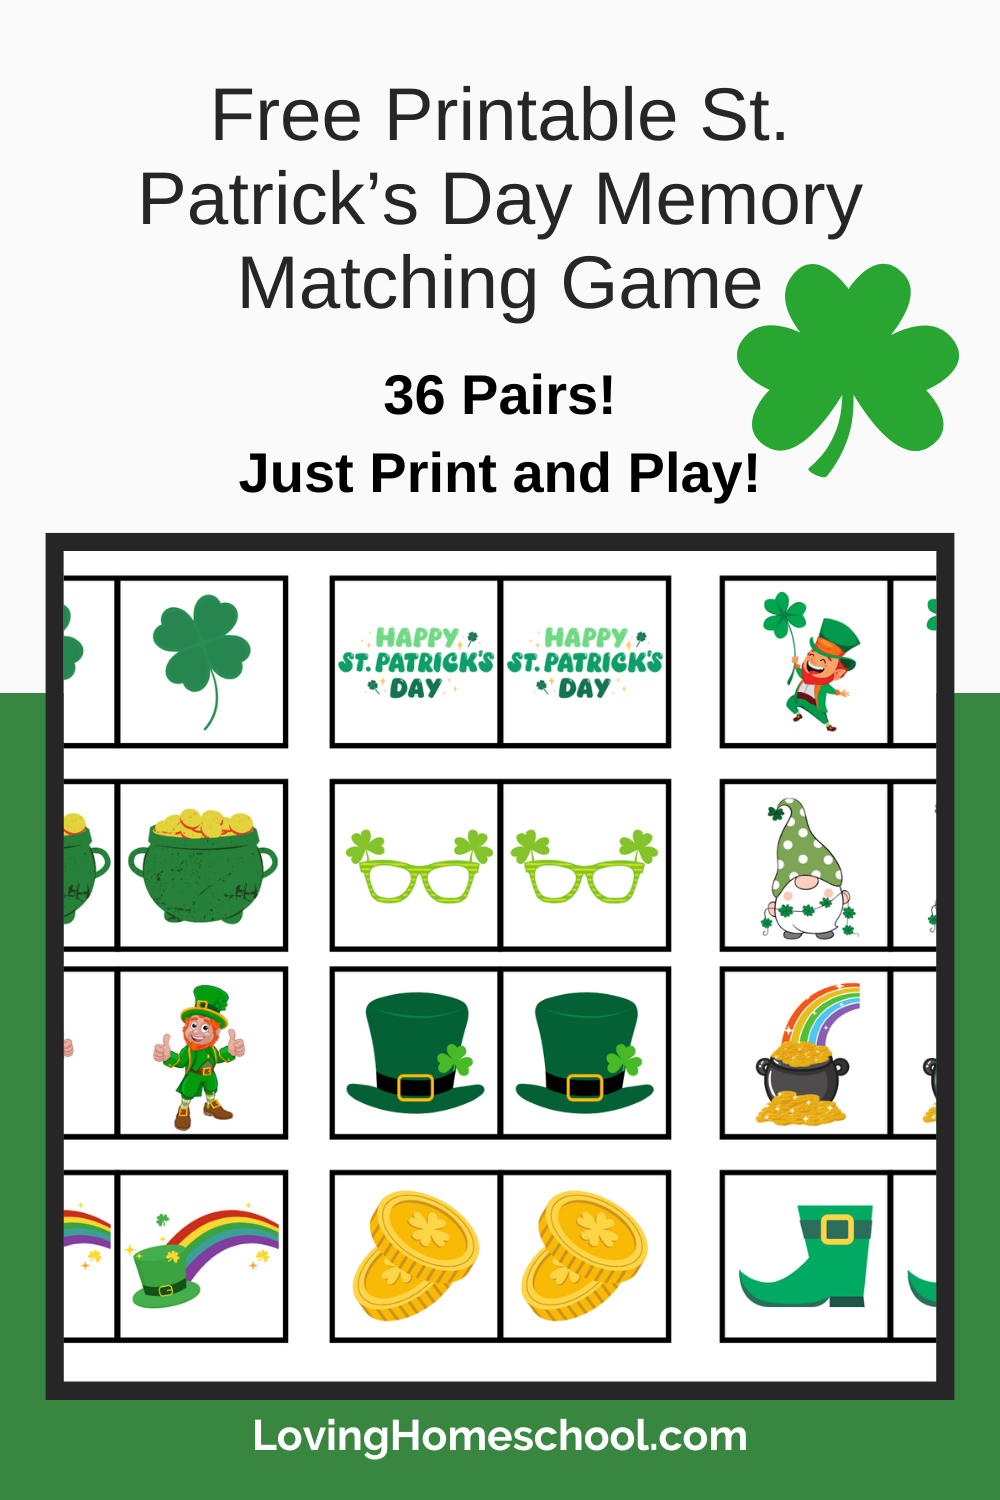 Free Printable St. Patrick’s Day Memory Matching Game Pinterest Pin